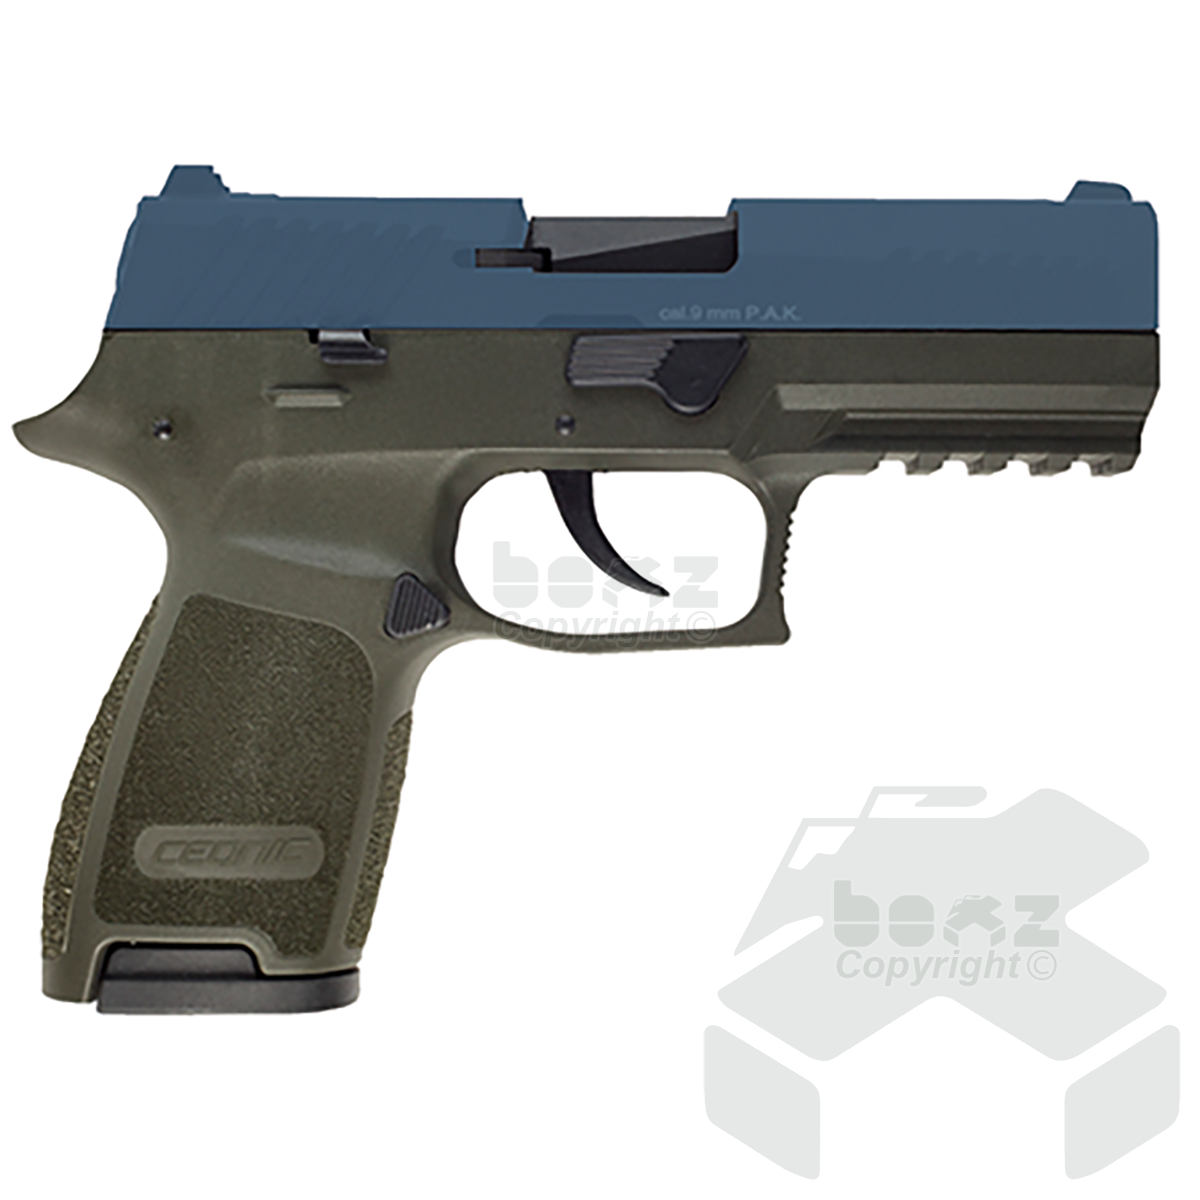 Ceonic P320 Blank Firing Pistol - 9mm - Blue Haki